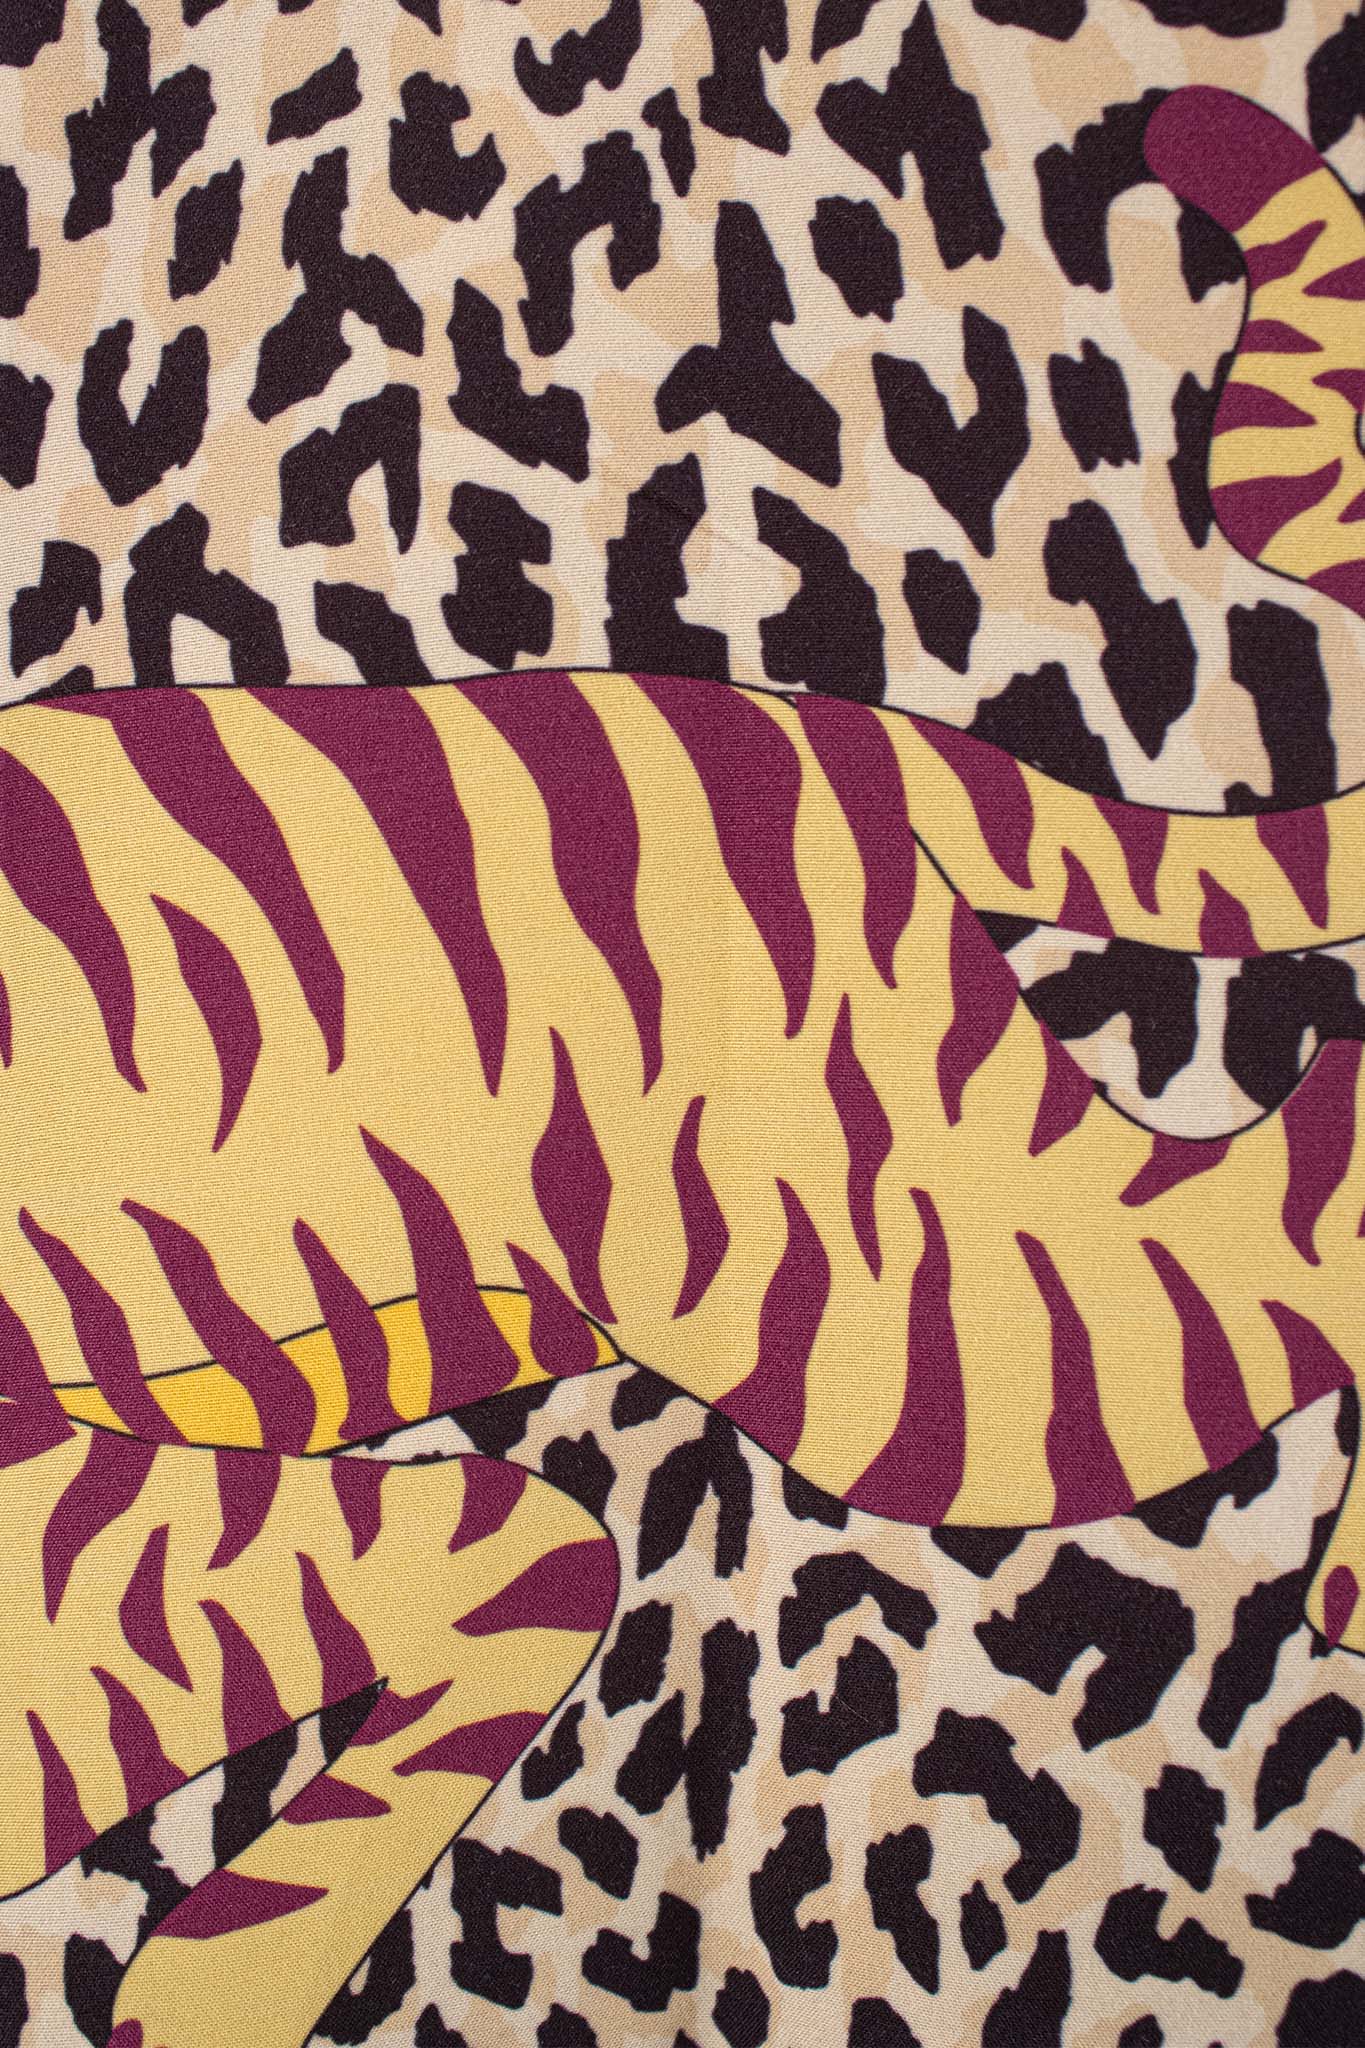 BANGLES Jacket Leopard Tiger Print